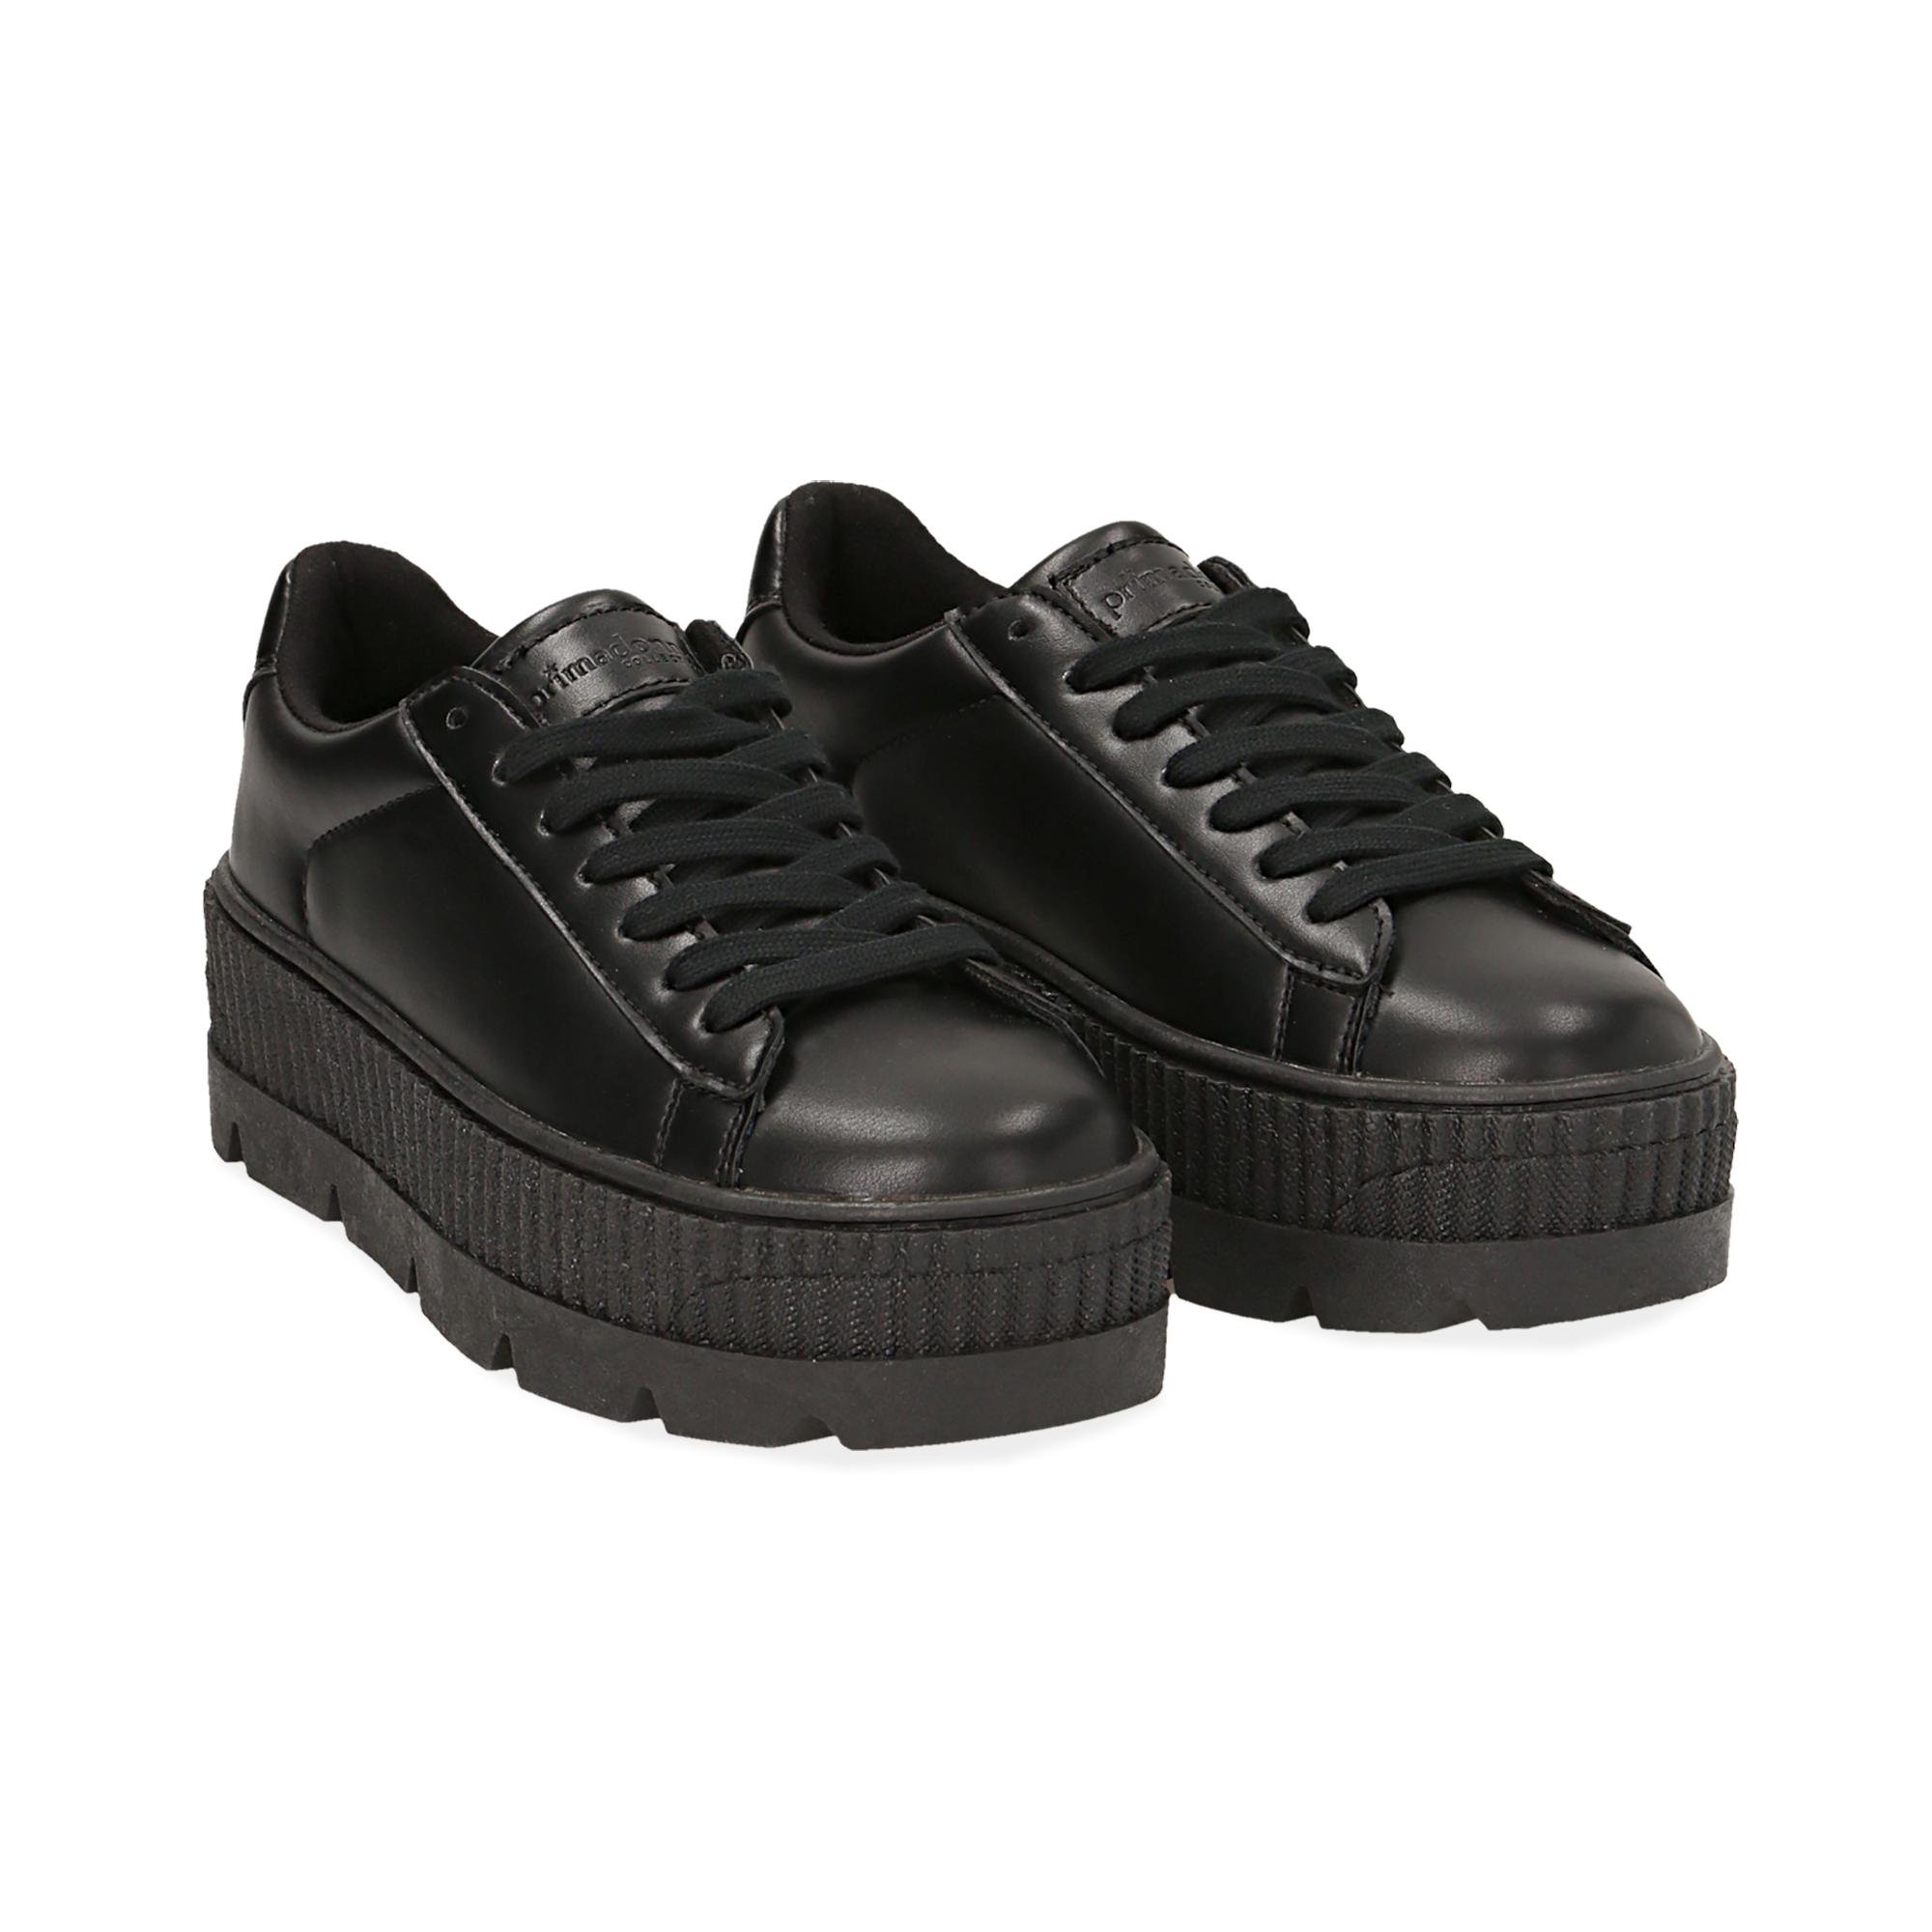 Sneakers platform nere in eco-pelle, zeppa 5 cm | Primadonna Collection